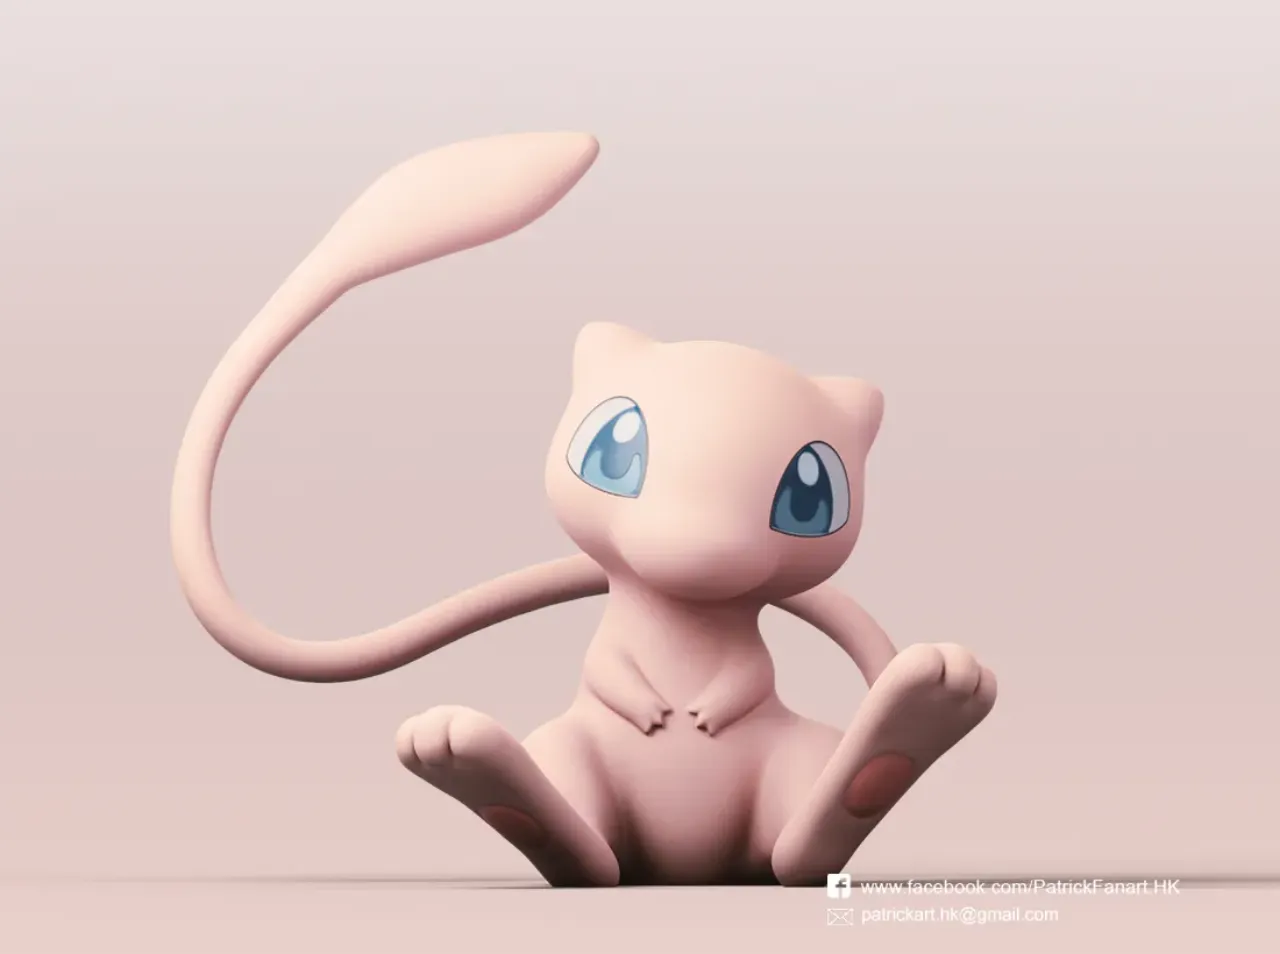 Cute Mew Pokemon (Print in Place)